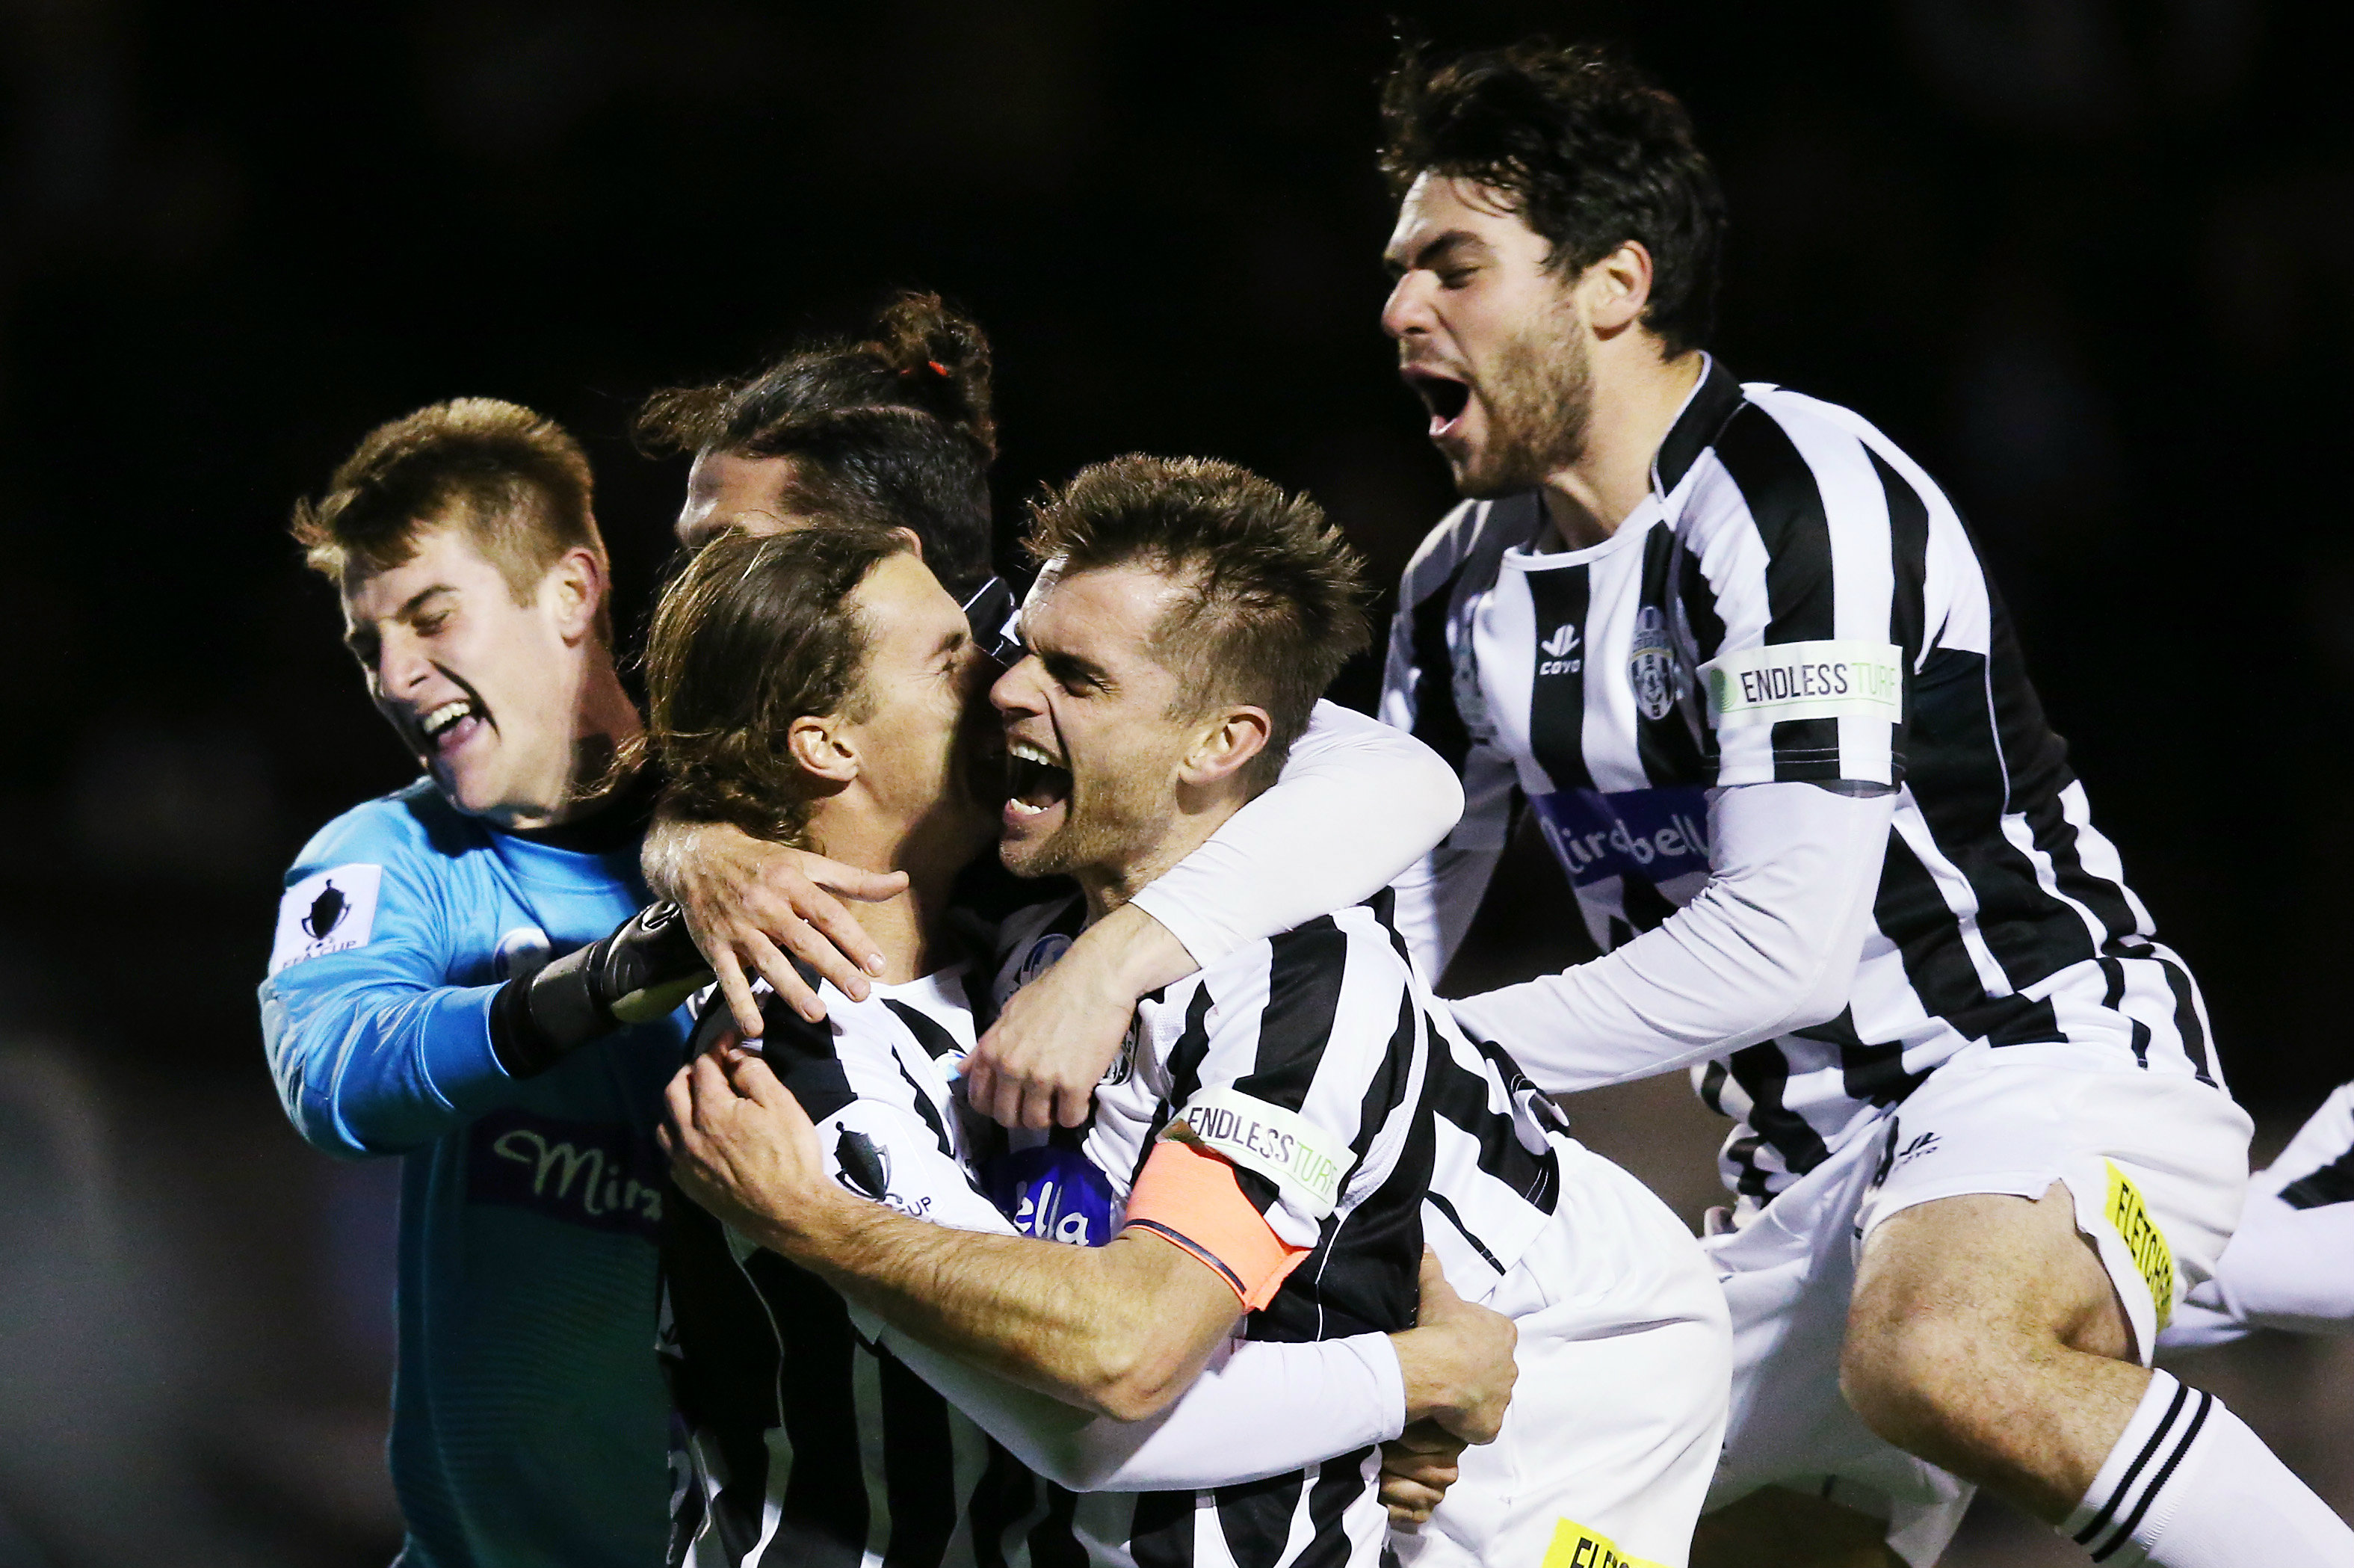 The joy of winning! Moreland Zebras players celebrate their penalty-shootout win